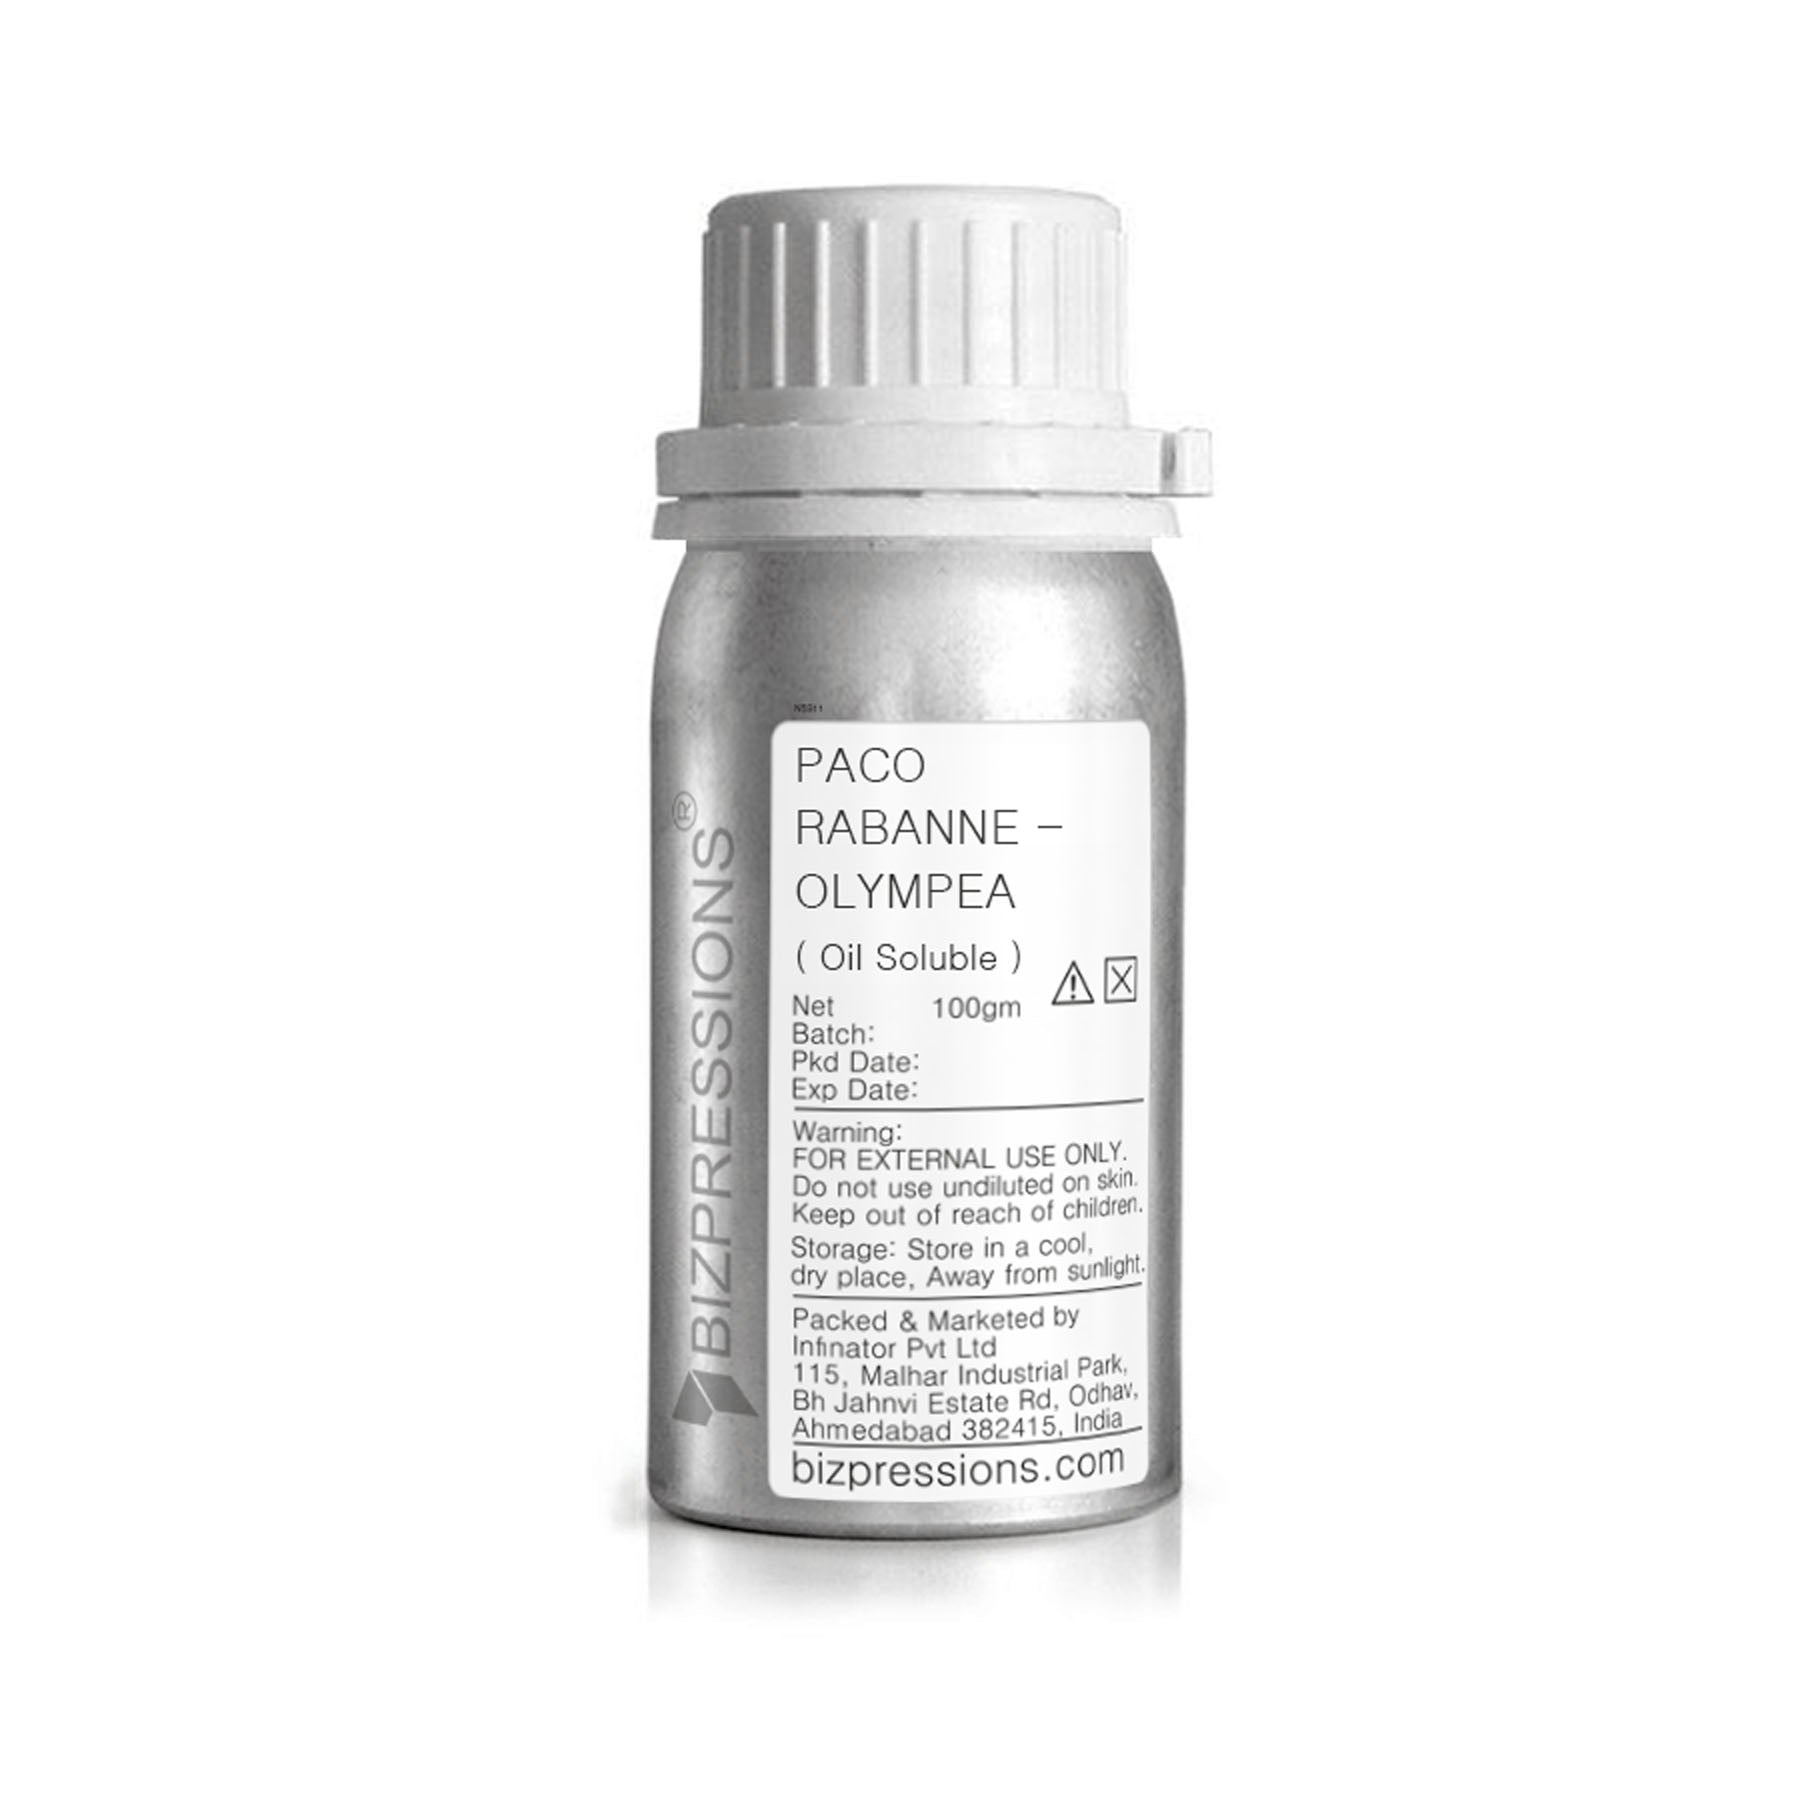 PACO RABANNE - OLYMPEA - Fragrance ( Oil Soluble ) - 100 gm